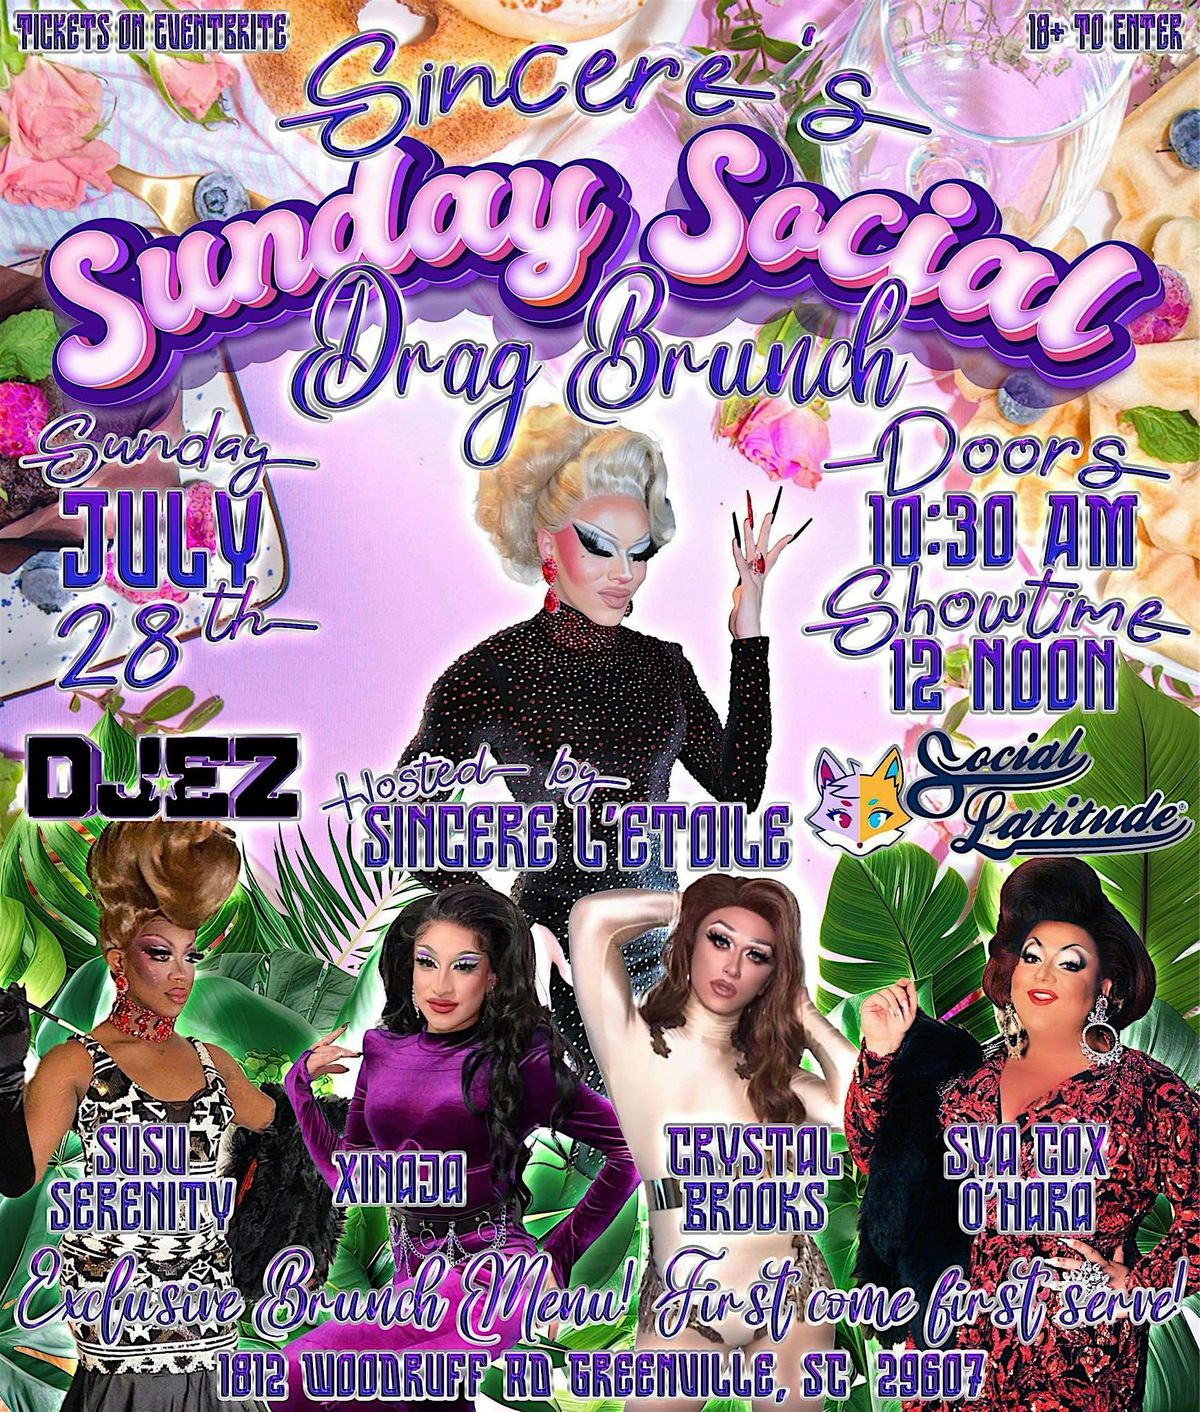 Sincere's Sunday School Drag Show